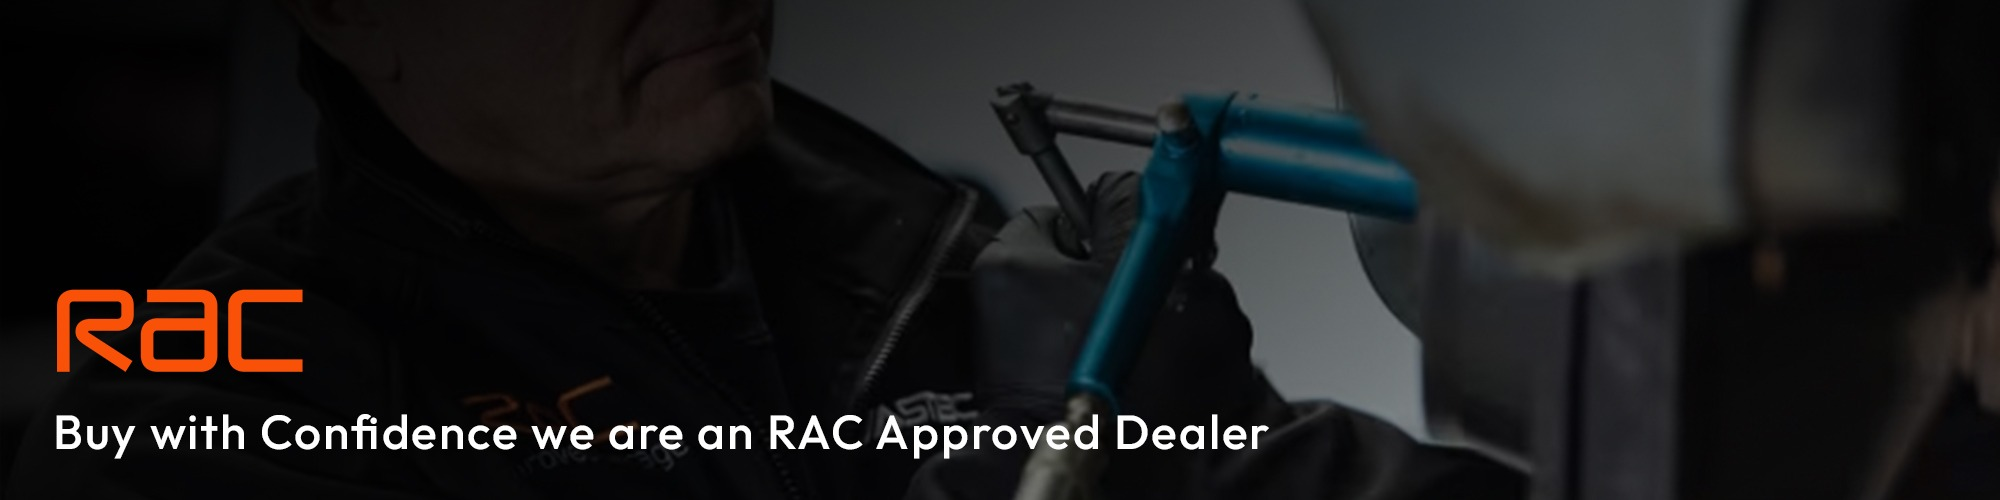 RAC Approved Dealer Triad of Newport